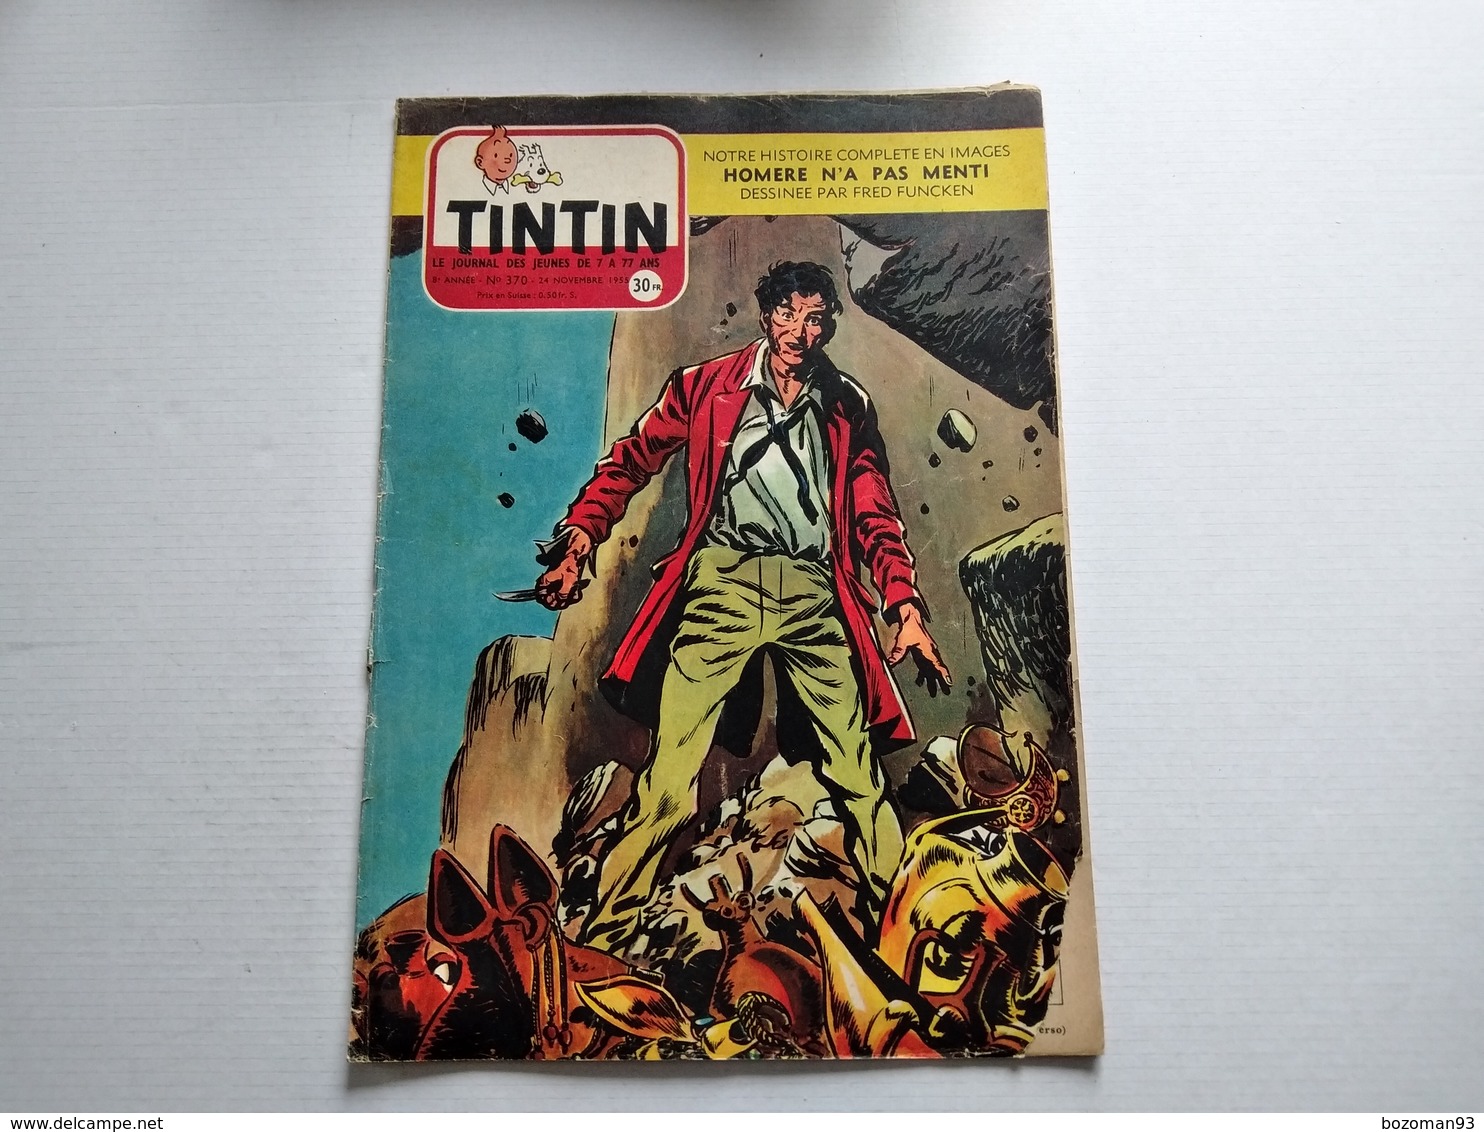 TINTIN N° 370 COUVERTURE DE FRED FUNCKEN + SCHLIEMANN DECOUVRE  TROIE ( Histoire De 4 Pages Inédite) N° CHARNIERE - Tintin